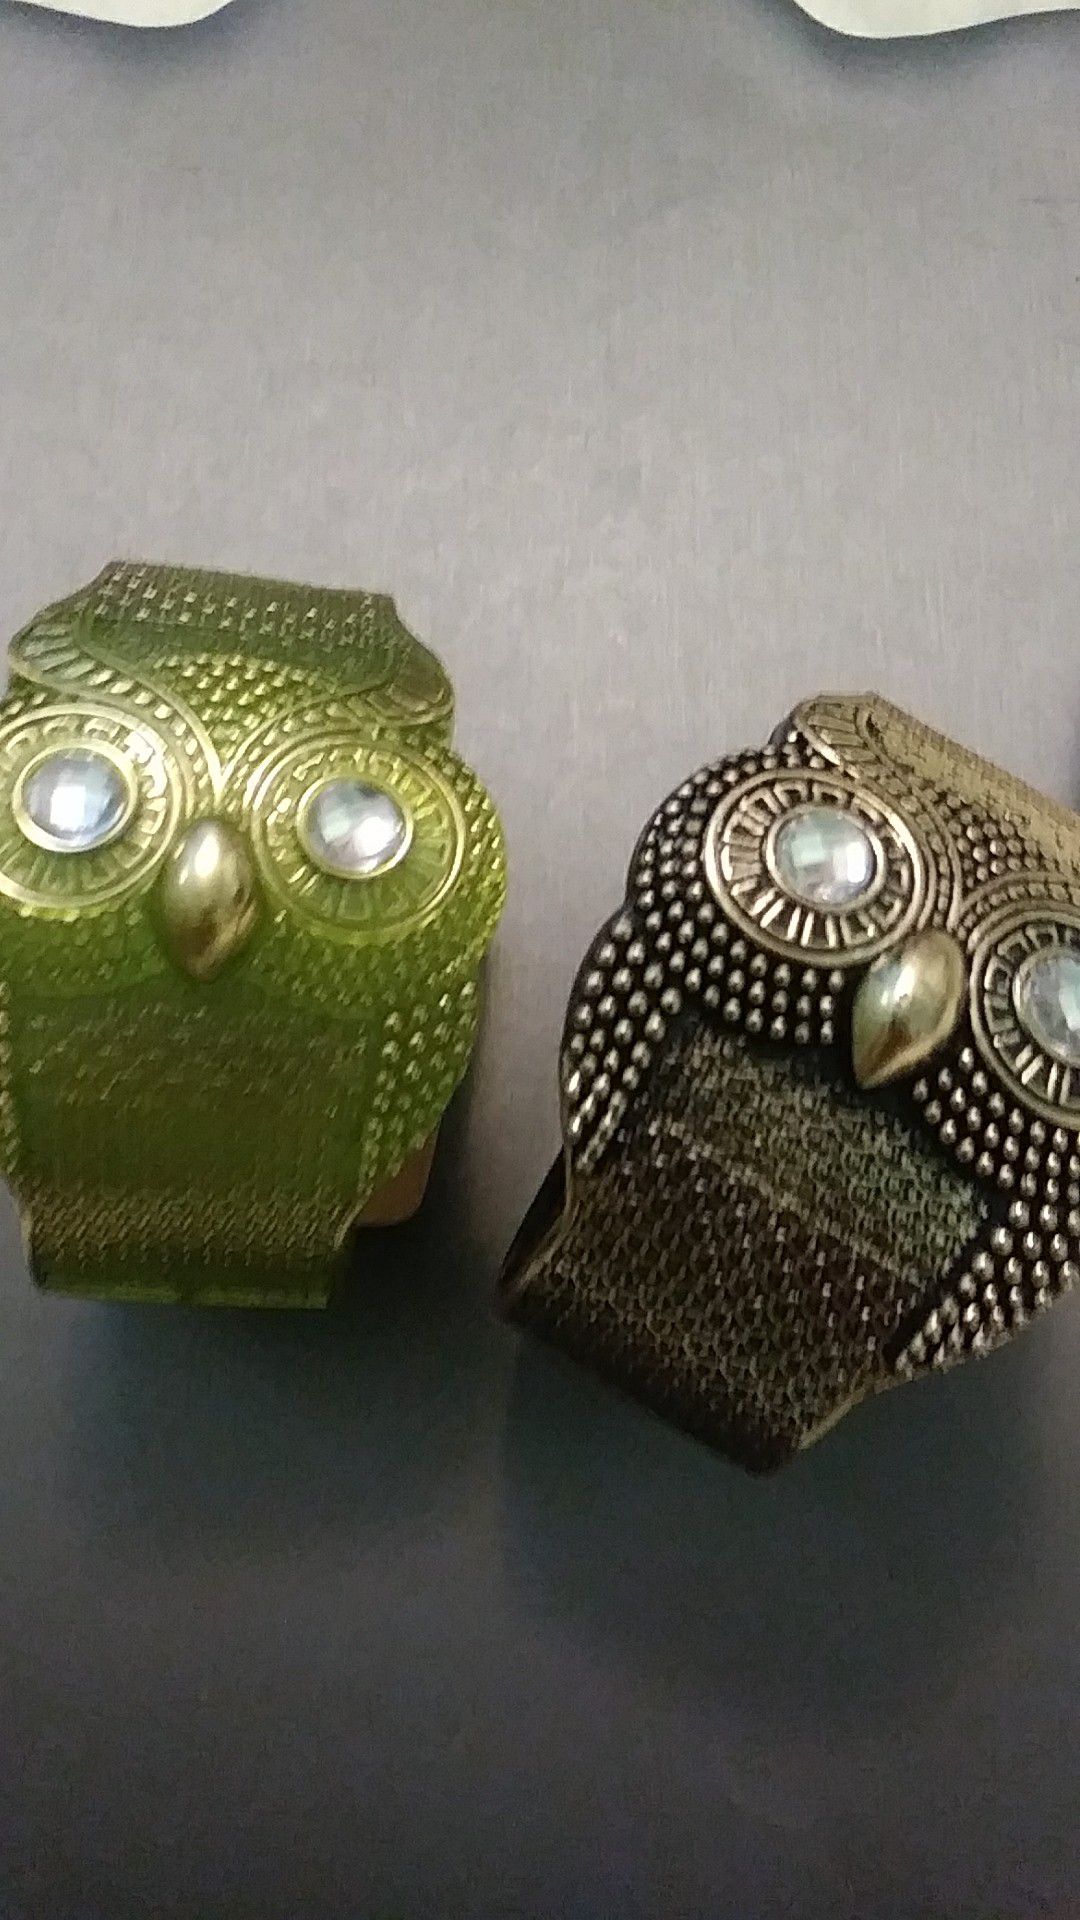 New 2 owl cuff bracelets